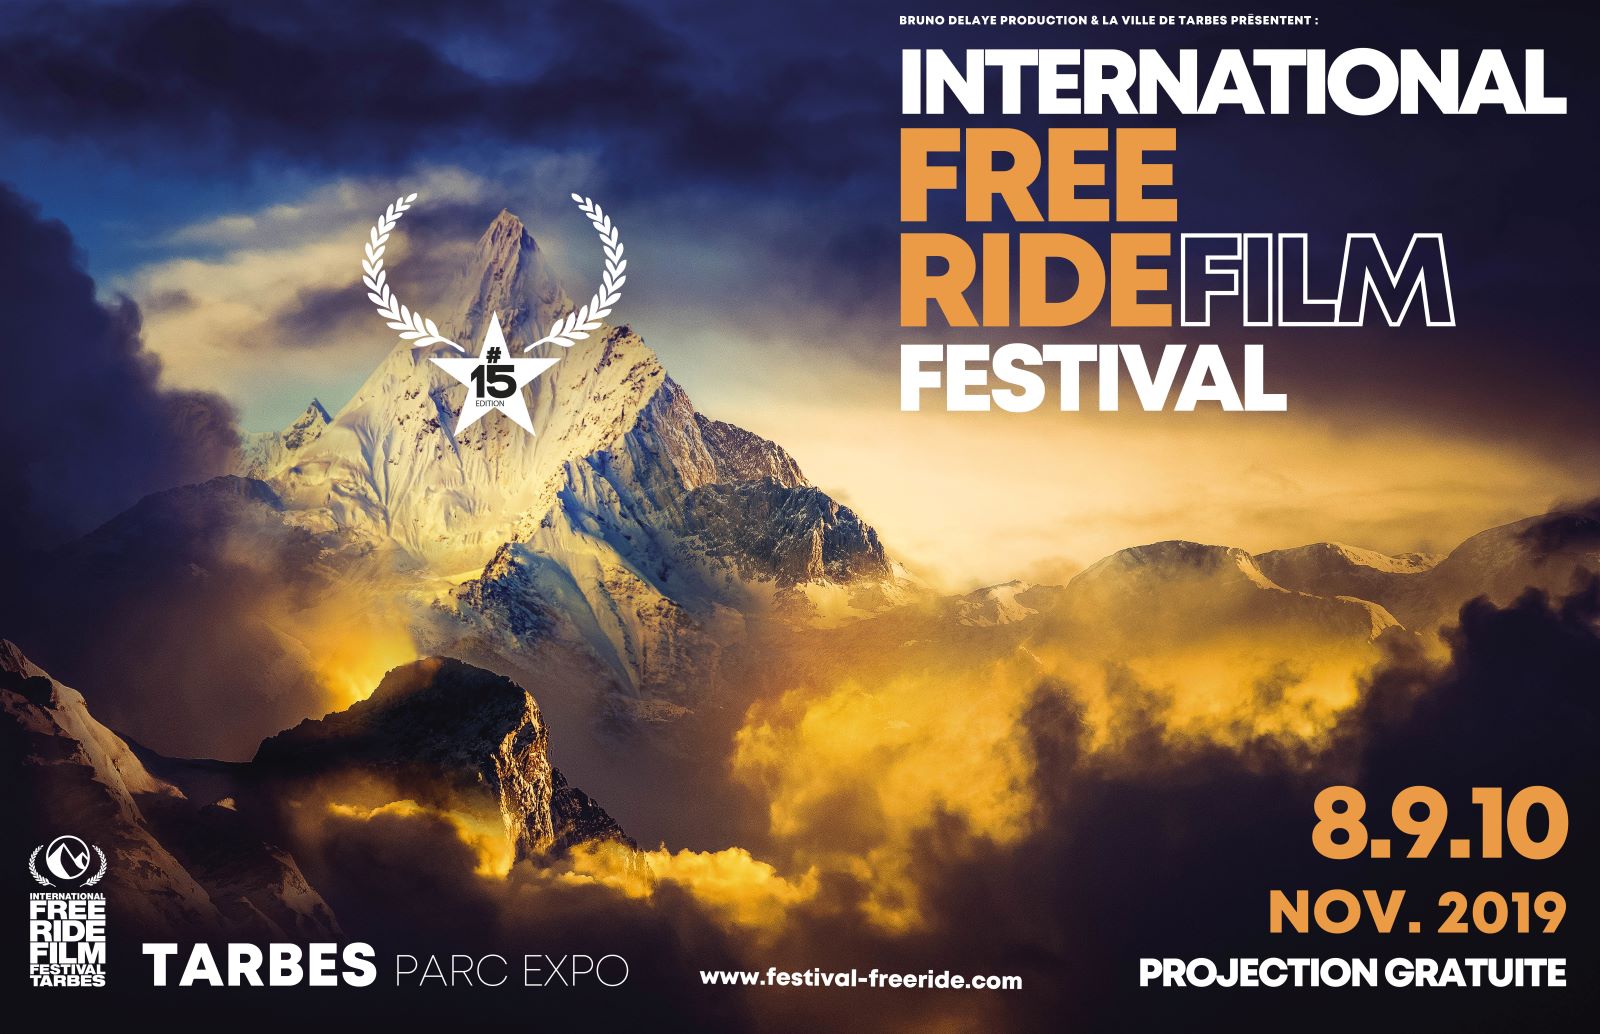 International free ride film fest